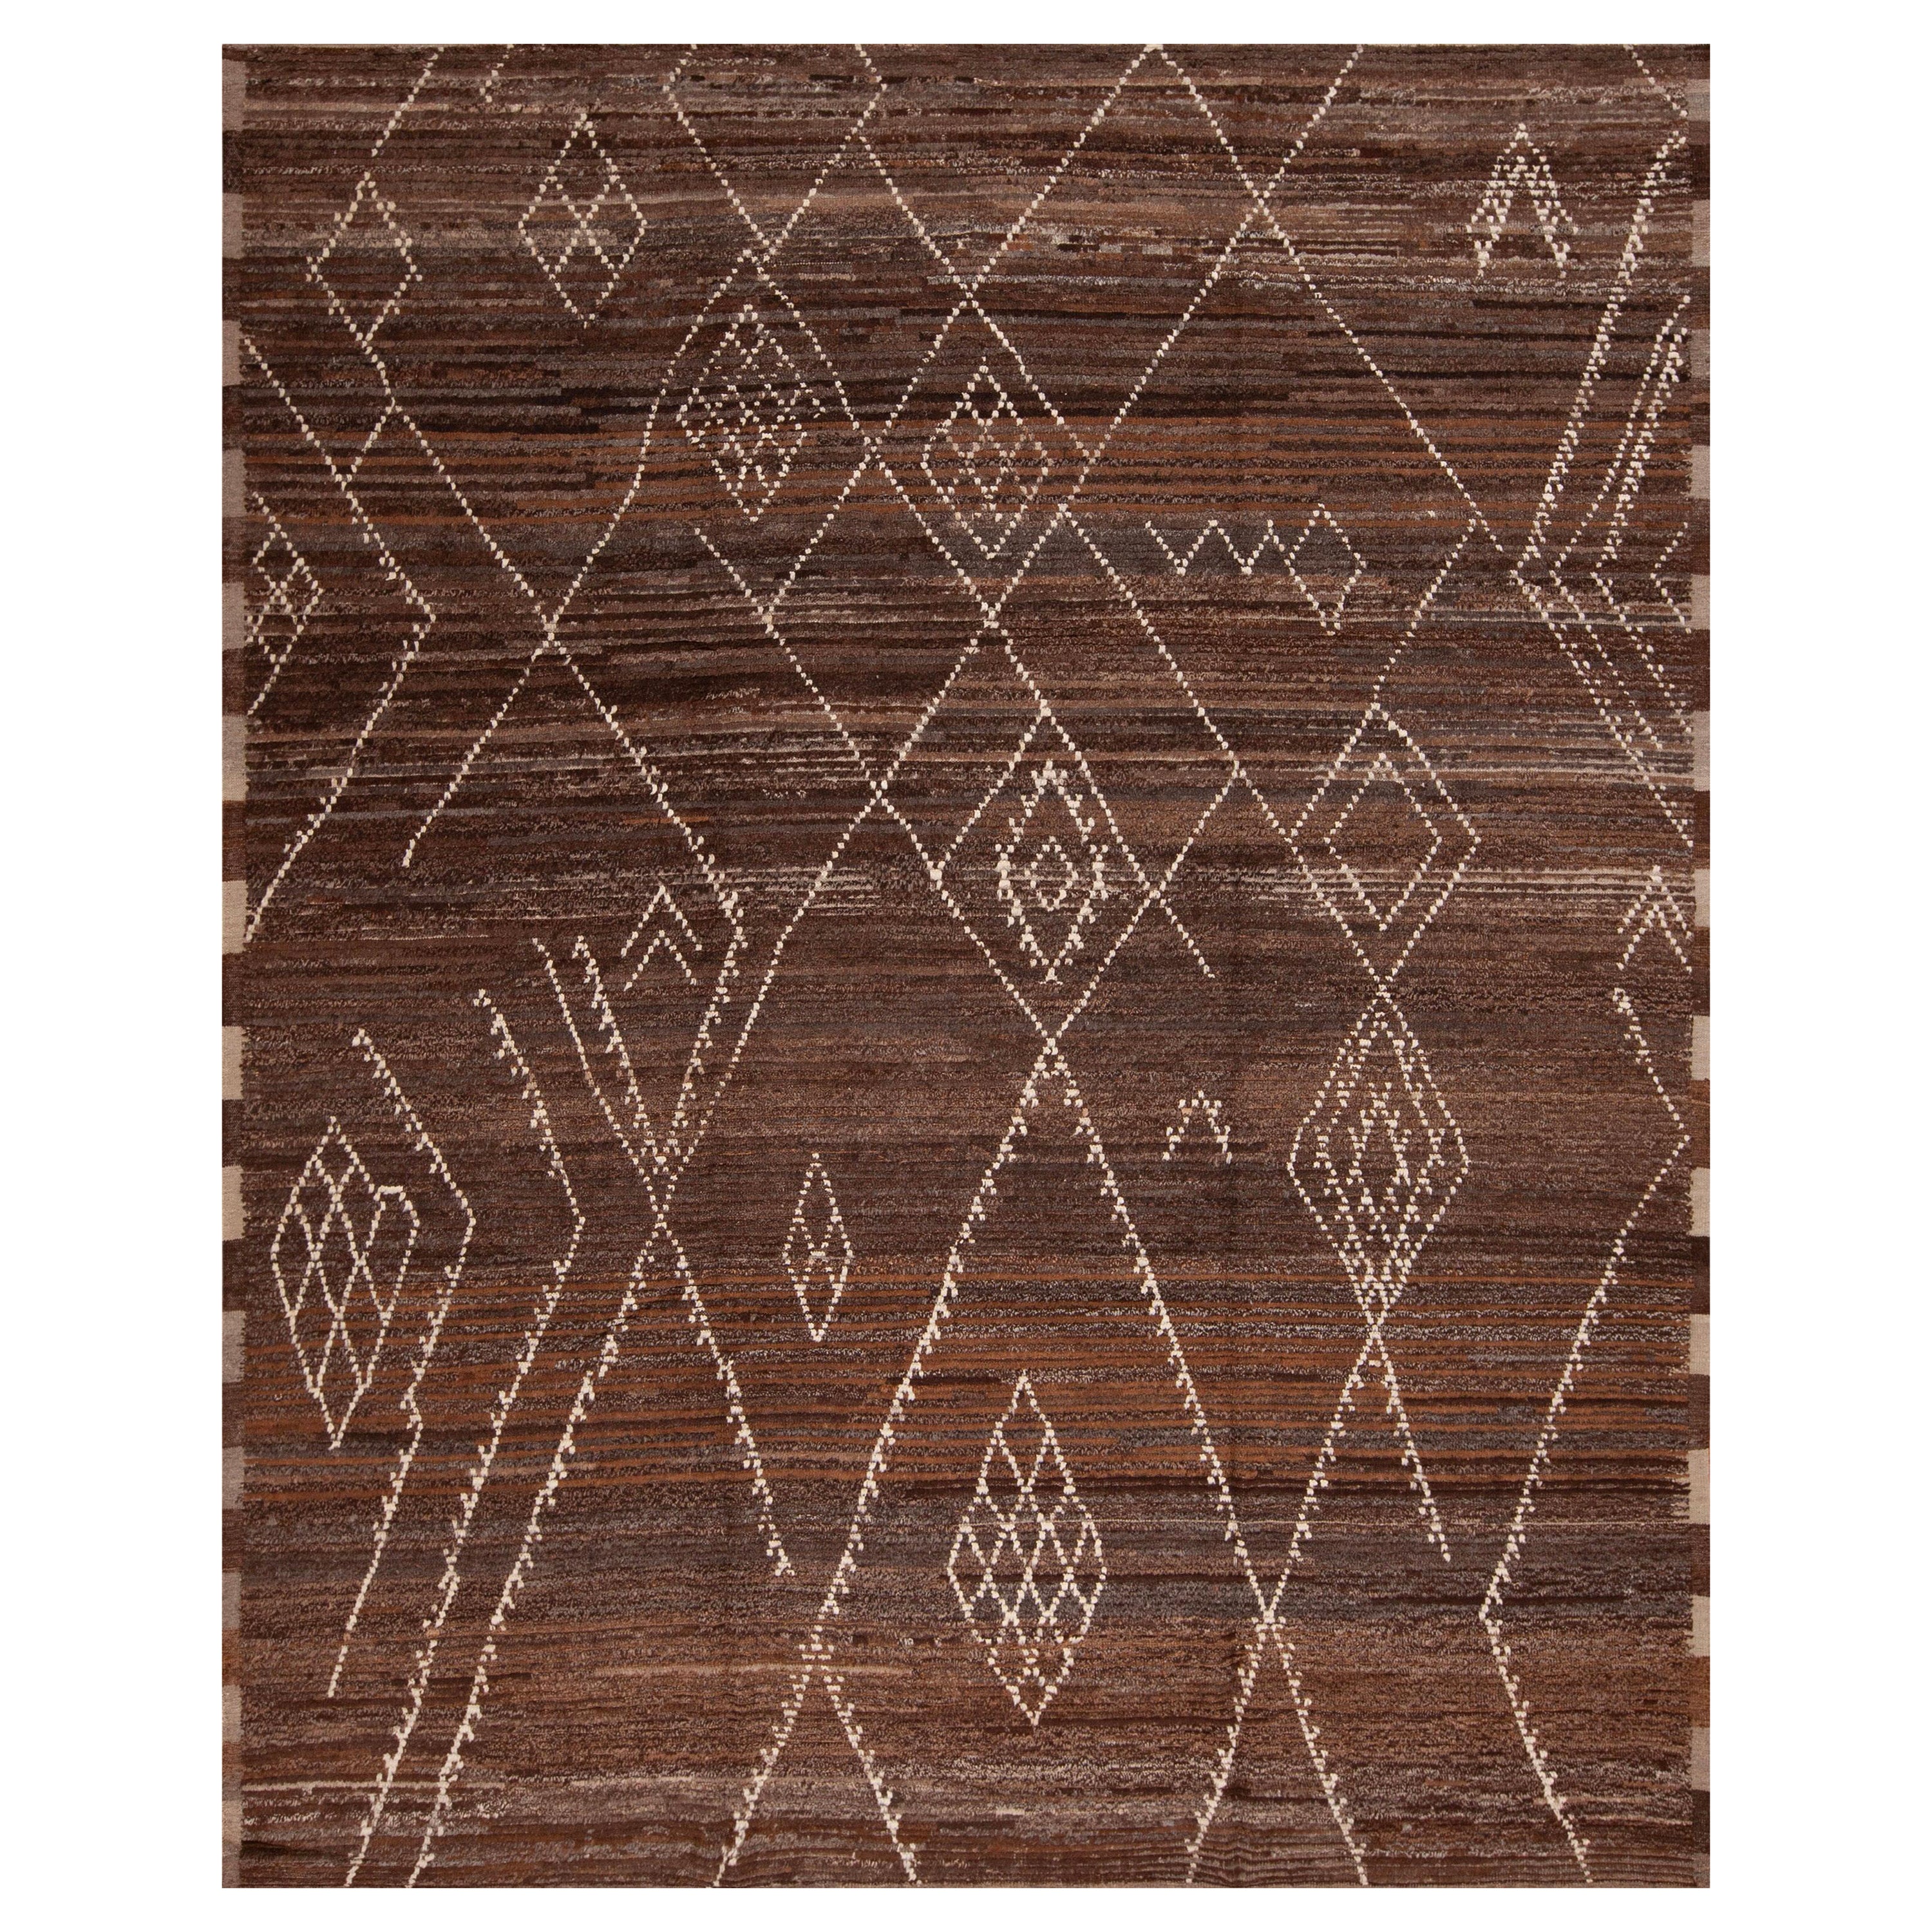 Nazmiyal Collection Primitive Tribal Geometric Pattern Modern Rug 9'2" x 11'4"